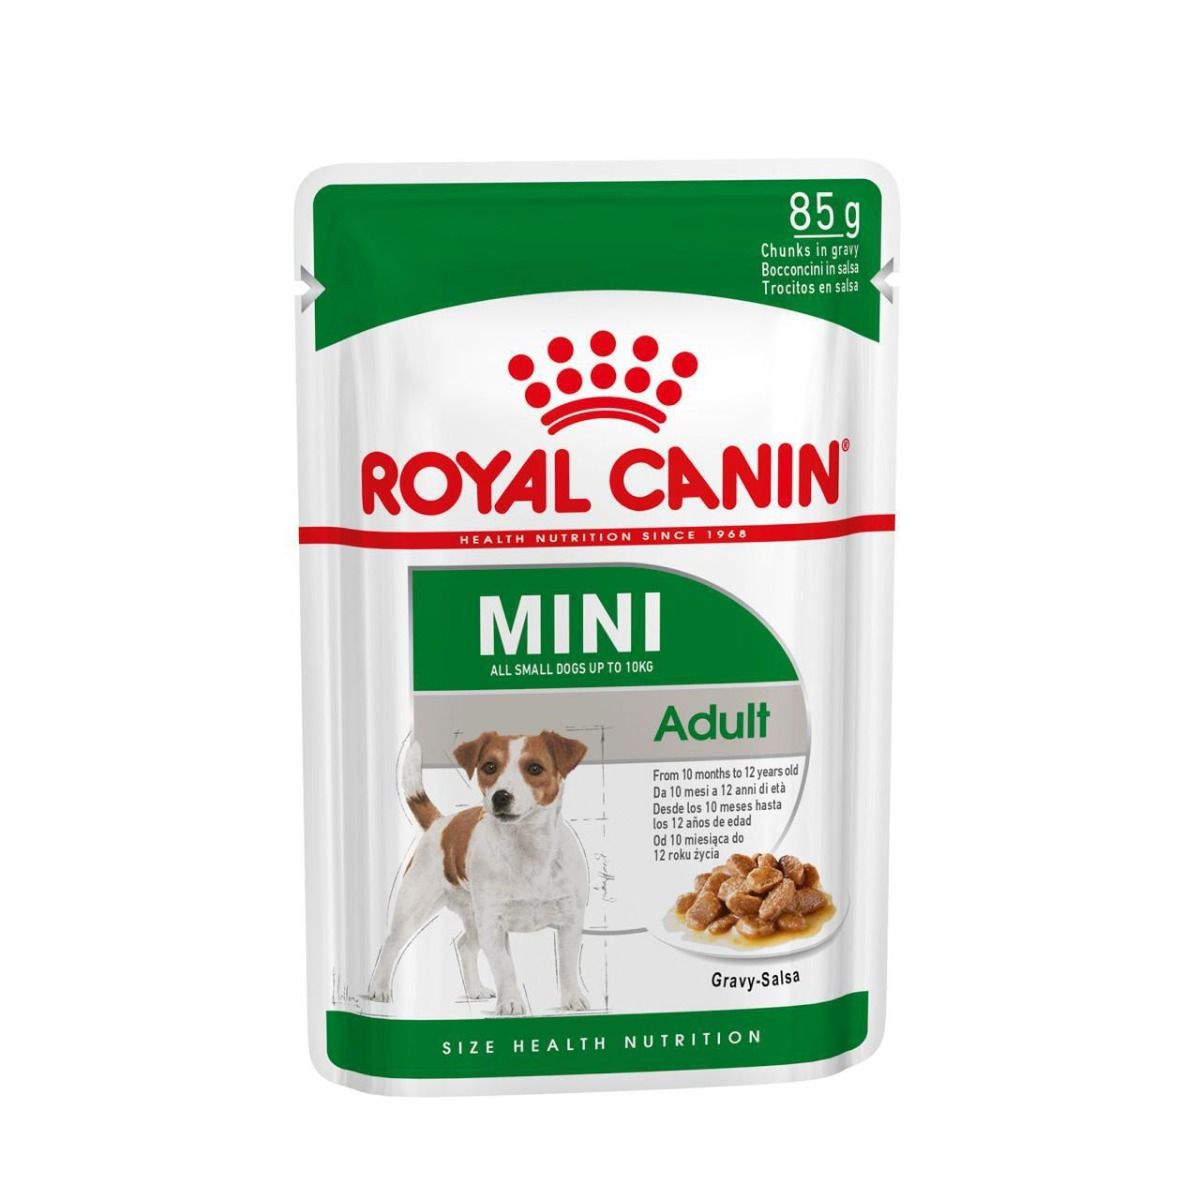 Royal Canin Mini Adult wet food Gravy